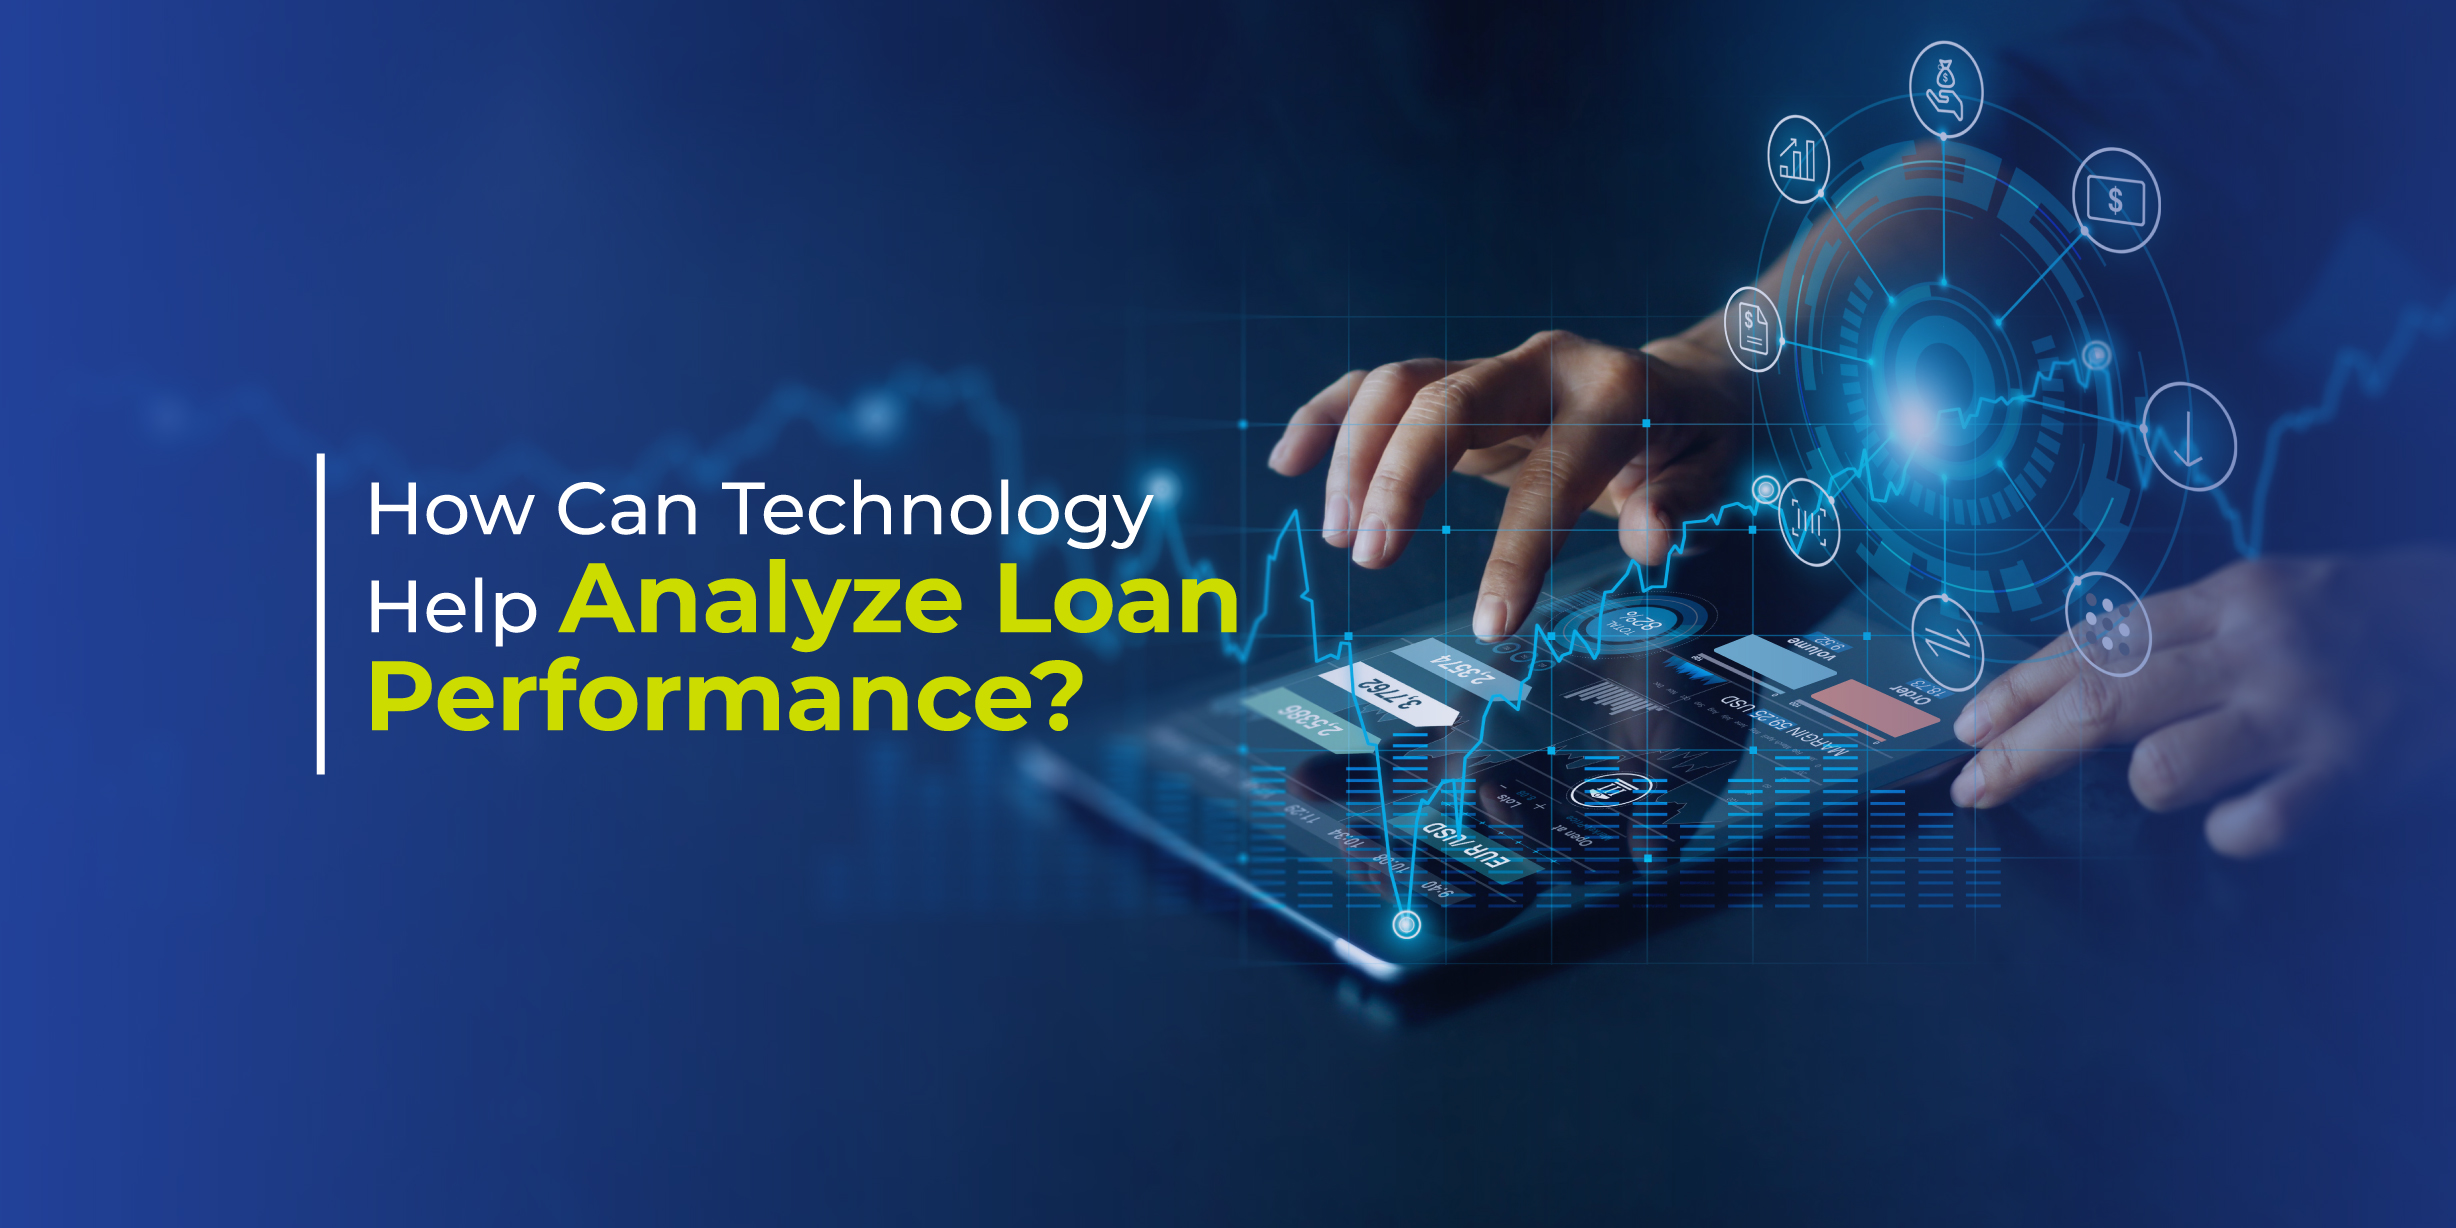 How Can Technology Help Analyze Loan Performance?